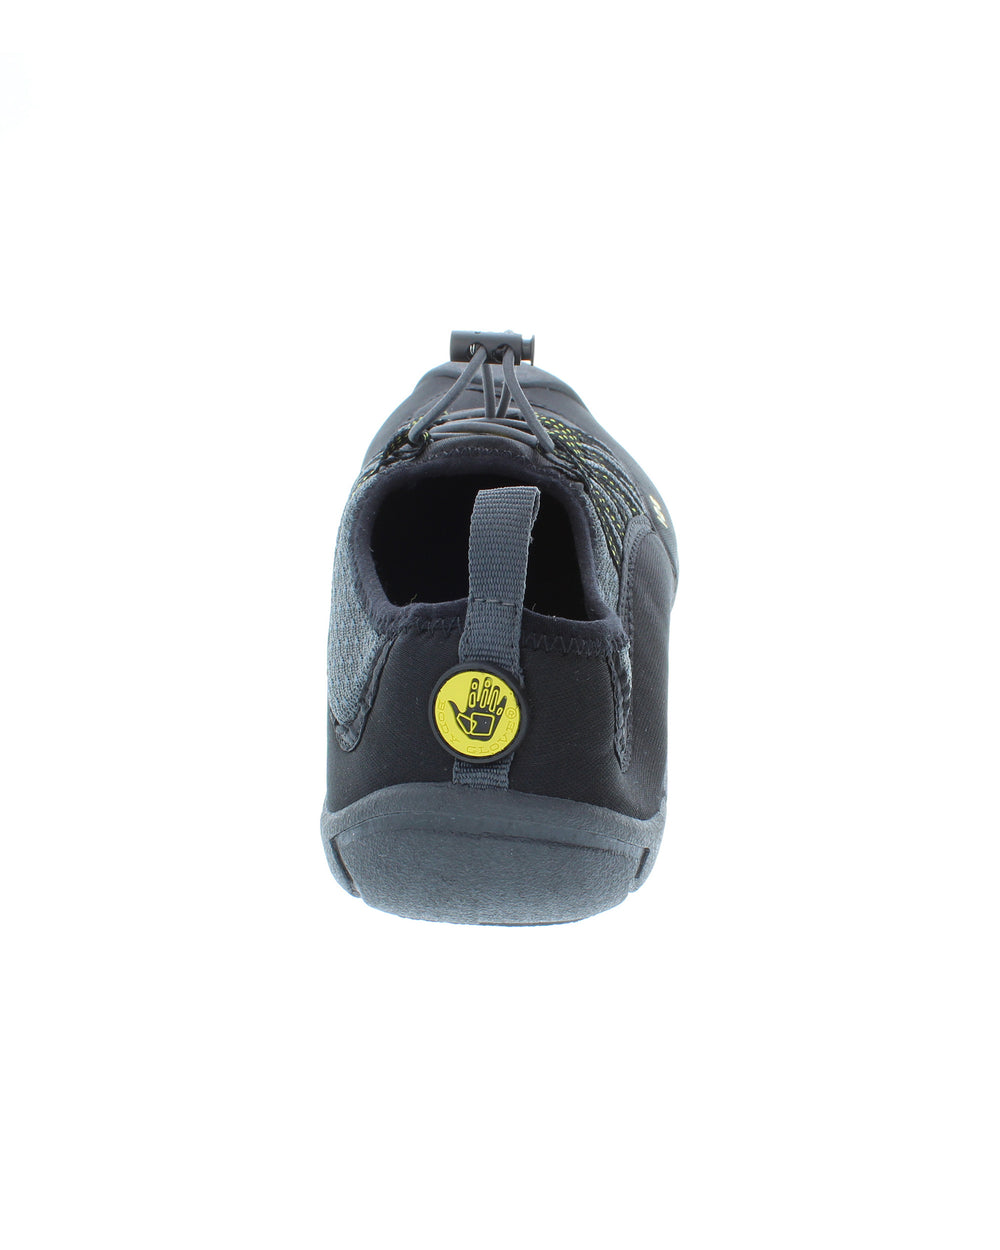 Men's Sidewinder Water Shoes - Black/Yellow